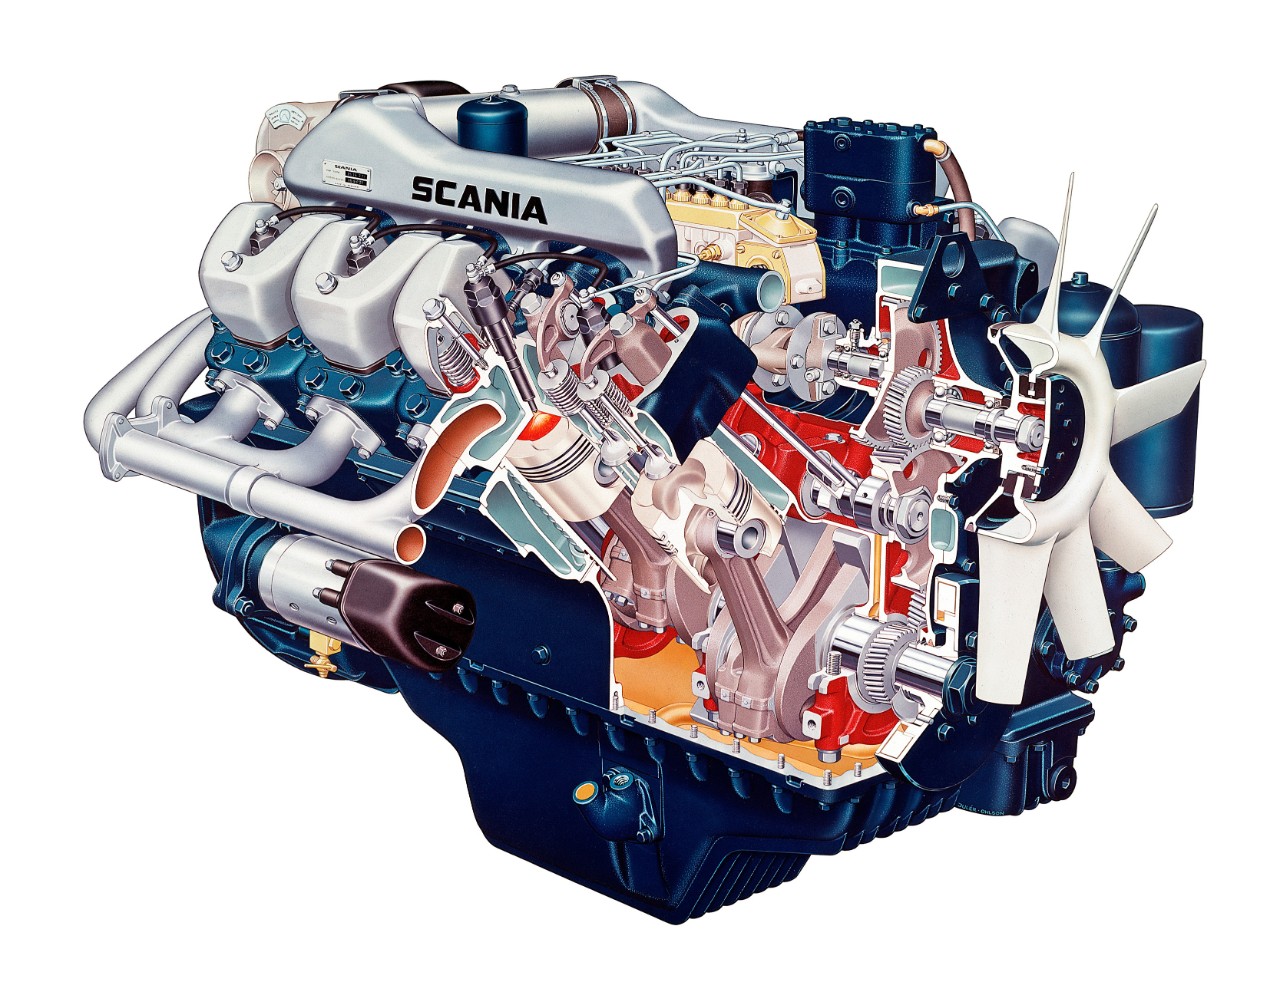 La storia del leggendario motore V8.